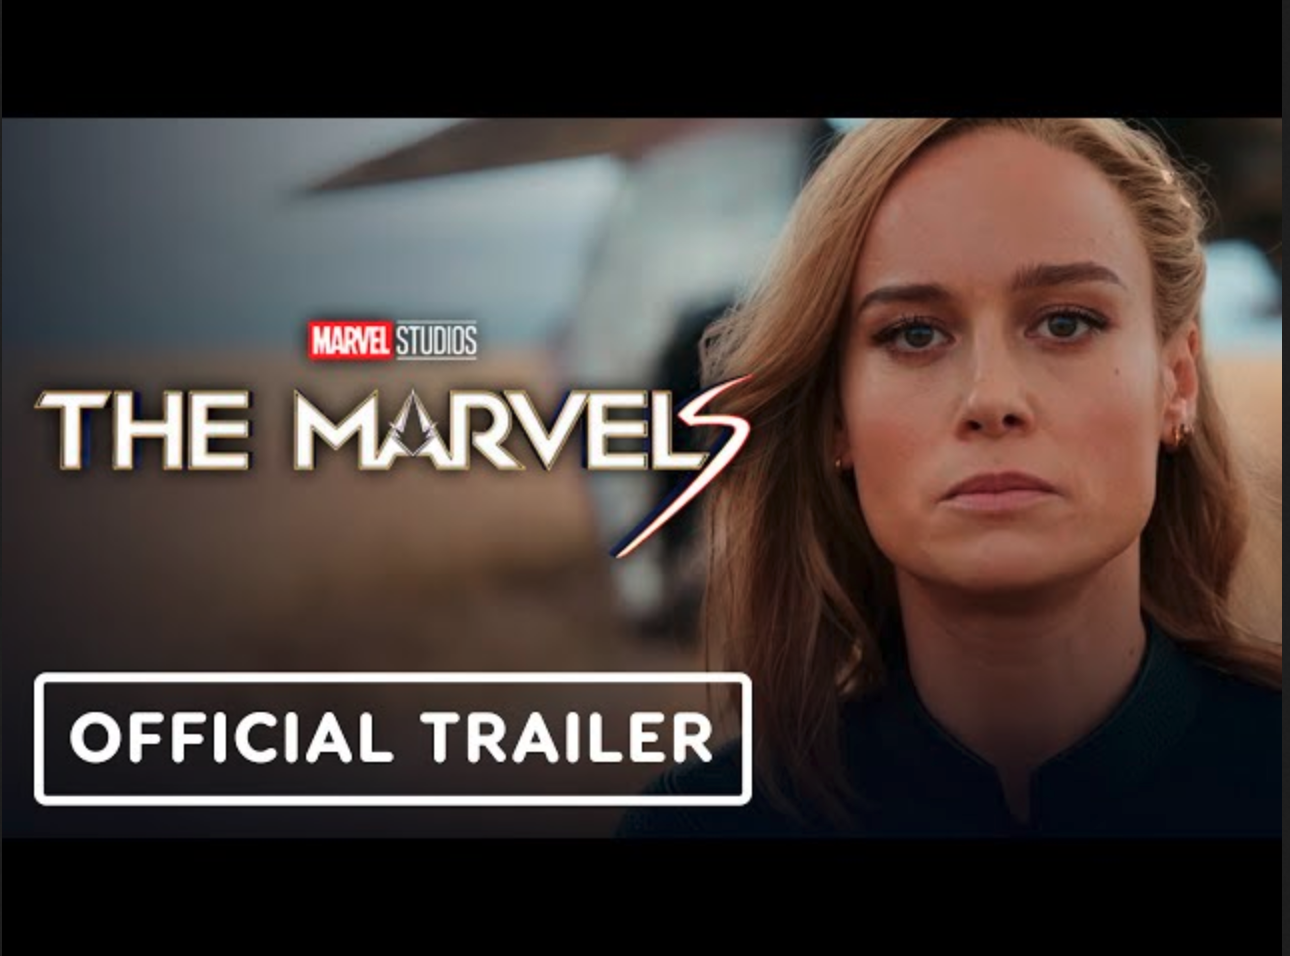 The Marvels, Final Trailer